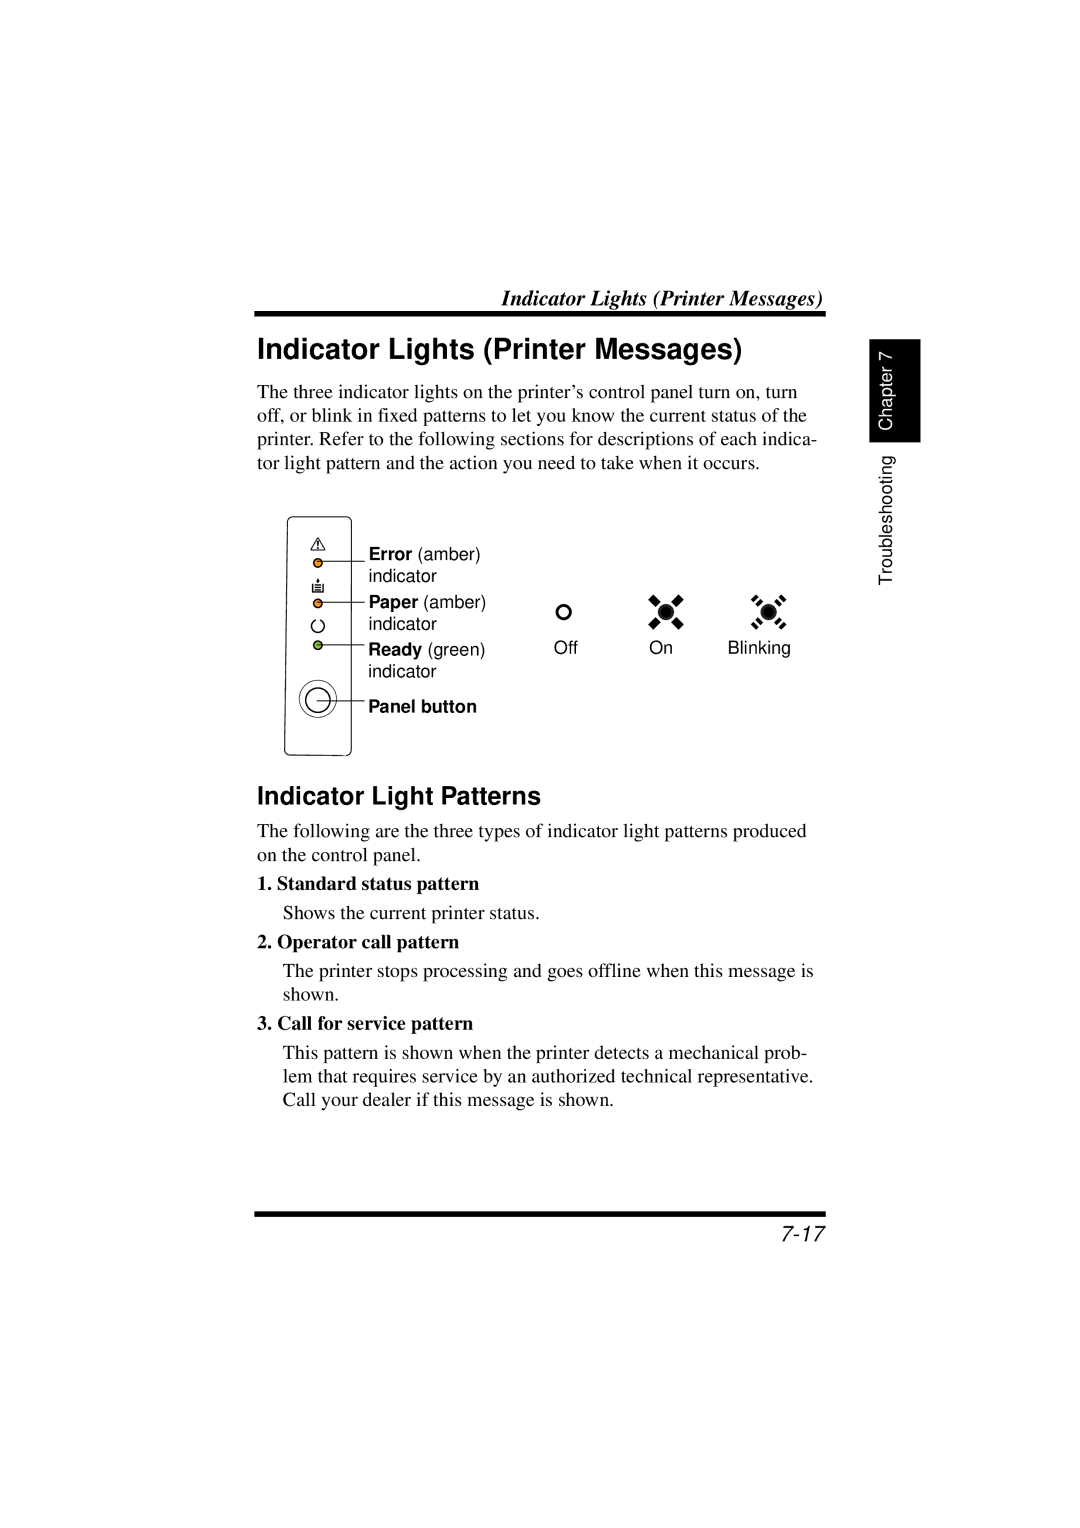 NEC 1100 user manual Indicator Lights Printer Messages, Indicator Light Patterns 